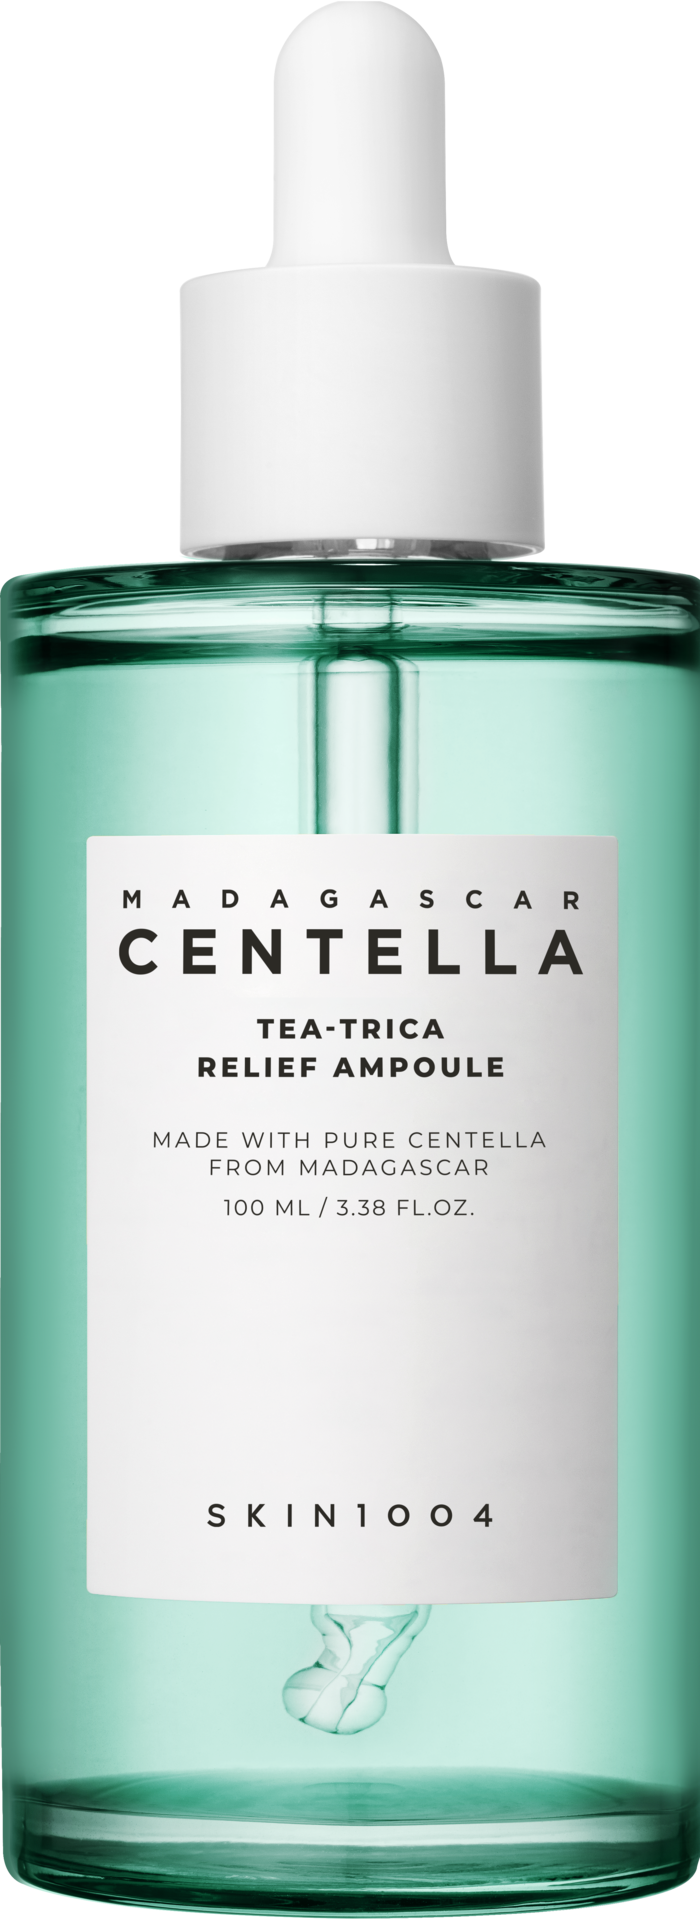 SKIN1004 Madagascar Centella Tea-Trica Relief Ampoule 100ml